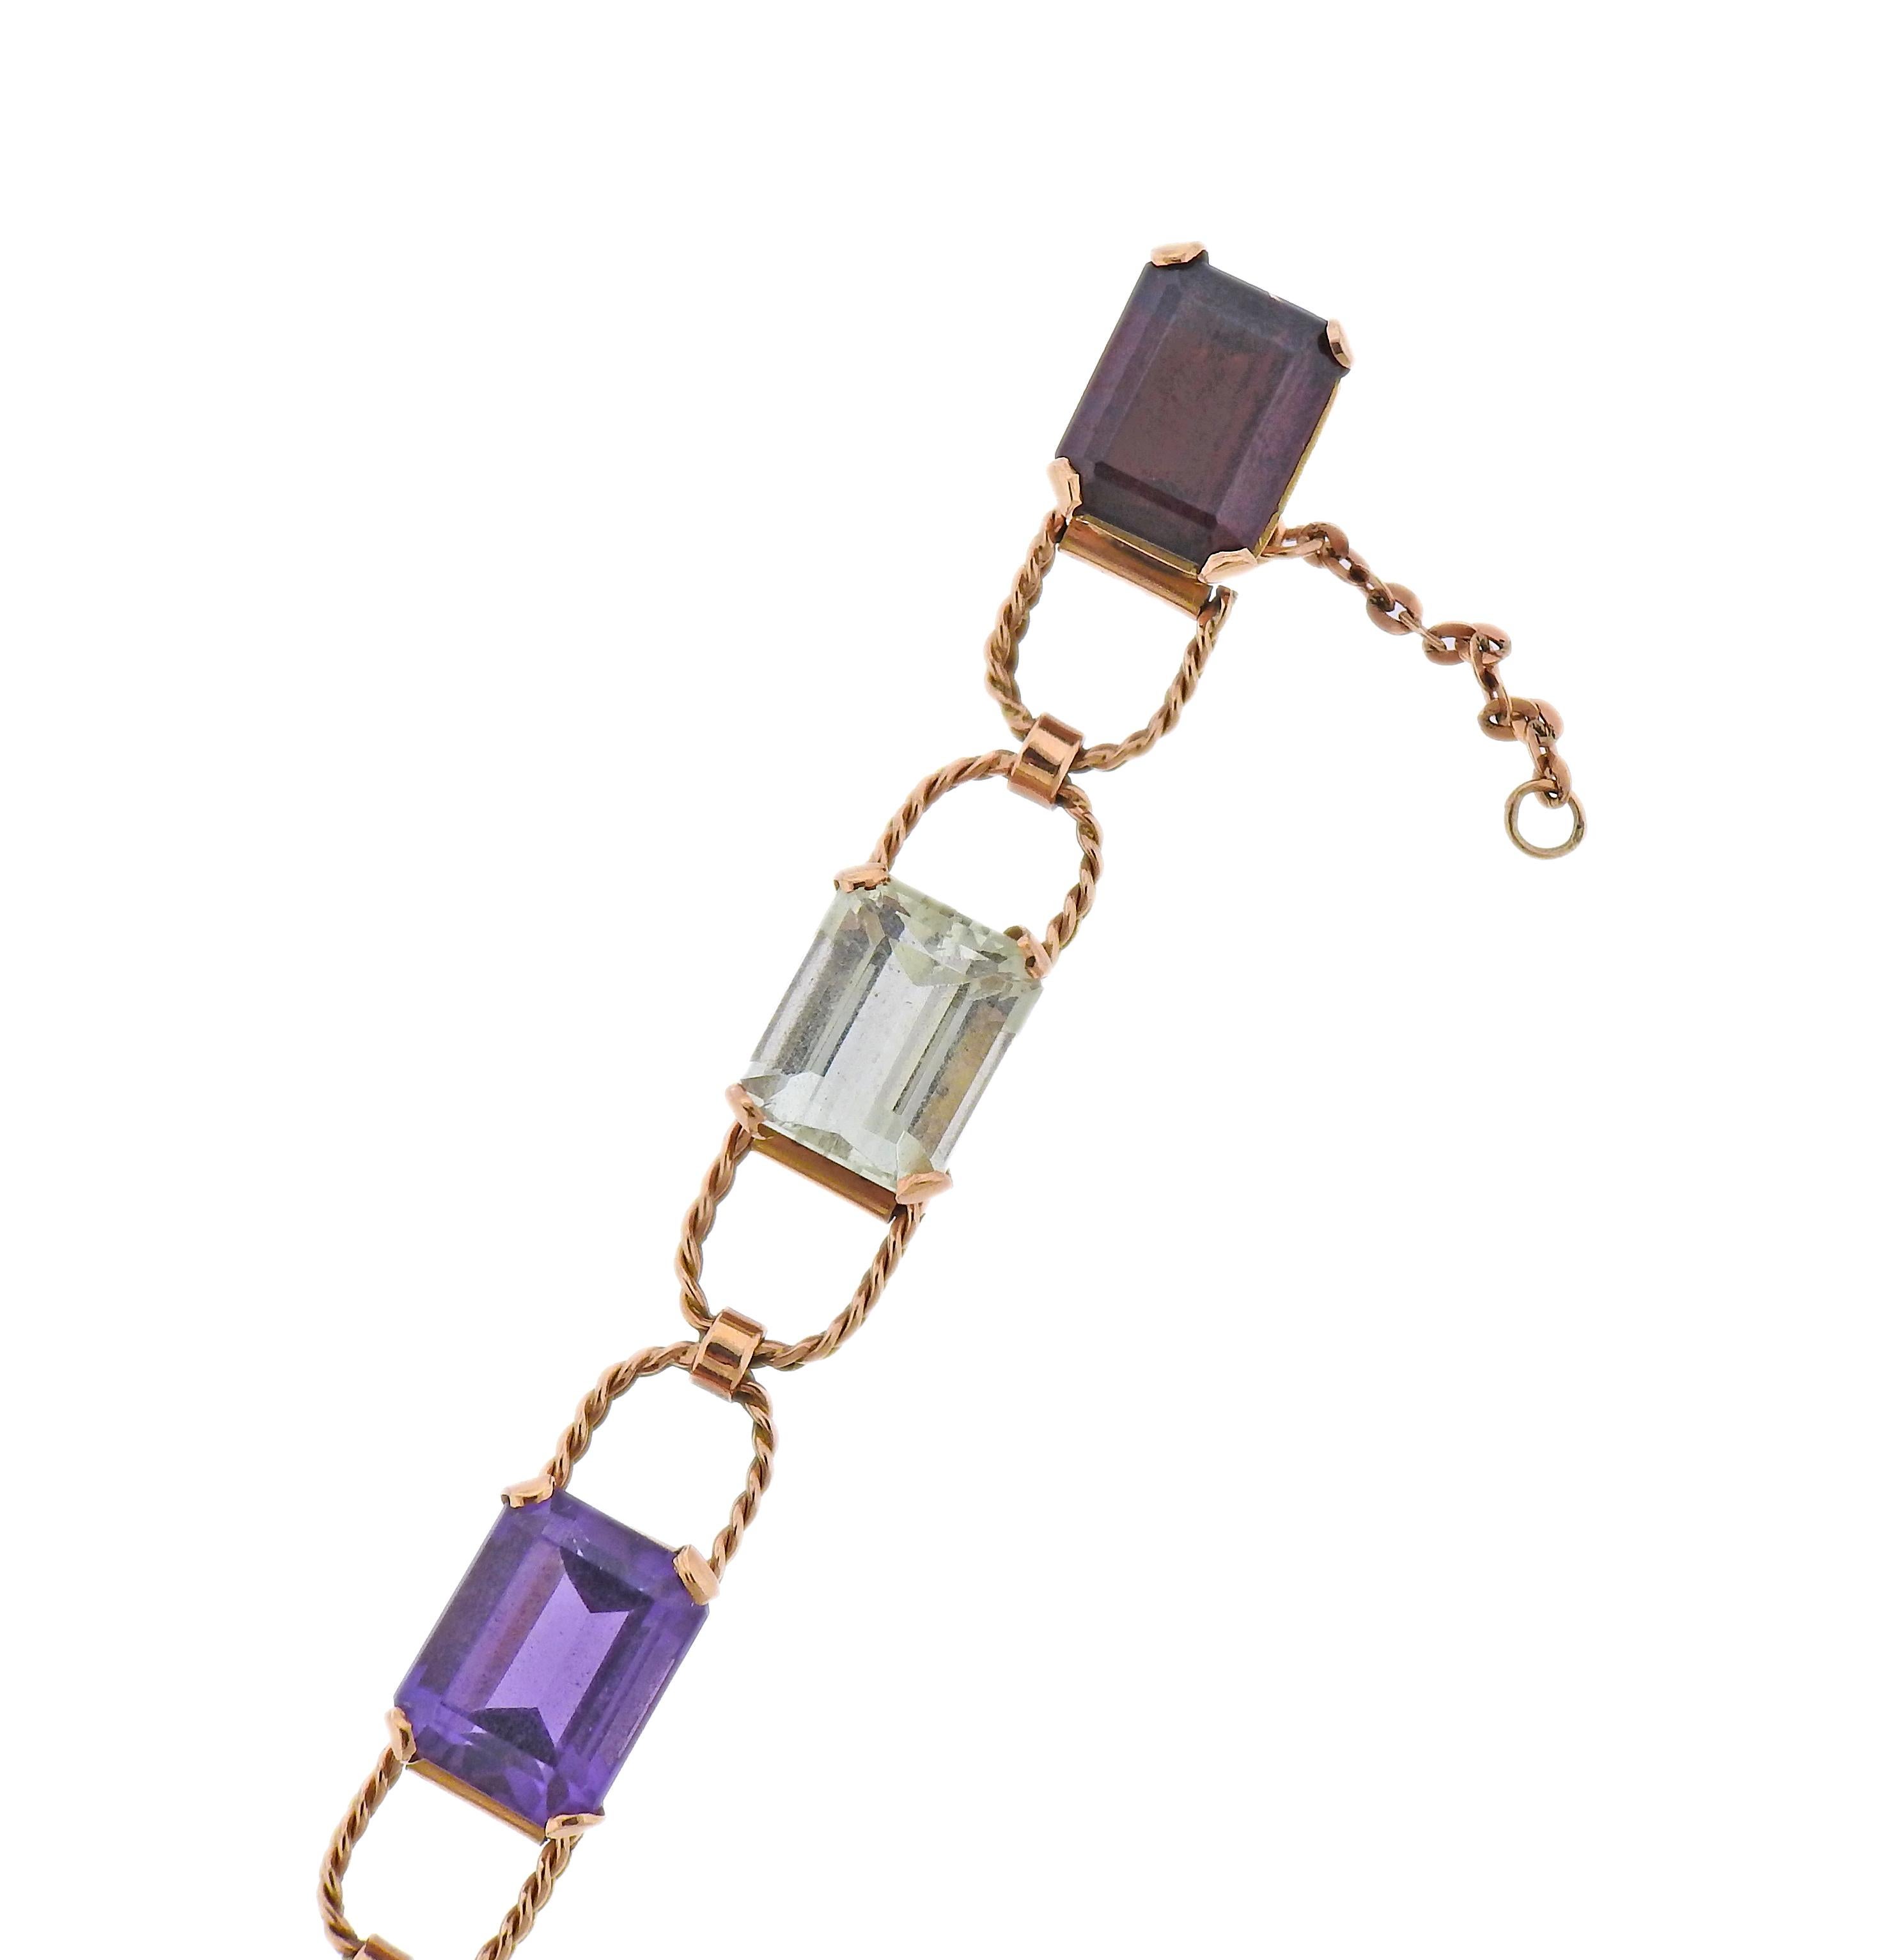 Mid century, circa 1950s, 14k gold bracelet with multi color semi precious gemstones - including amethyst, topaz, citrine, peridot and garnet. Bracelet is 6 7/8